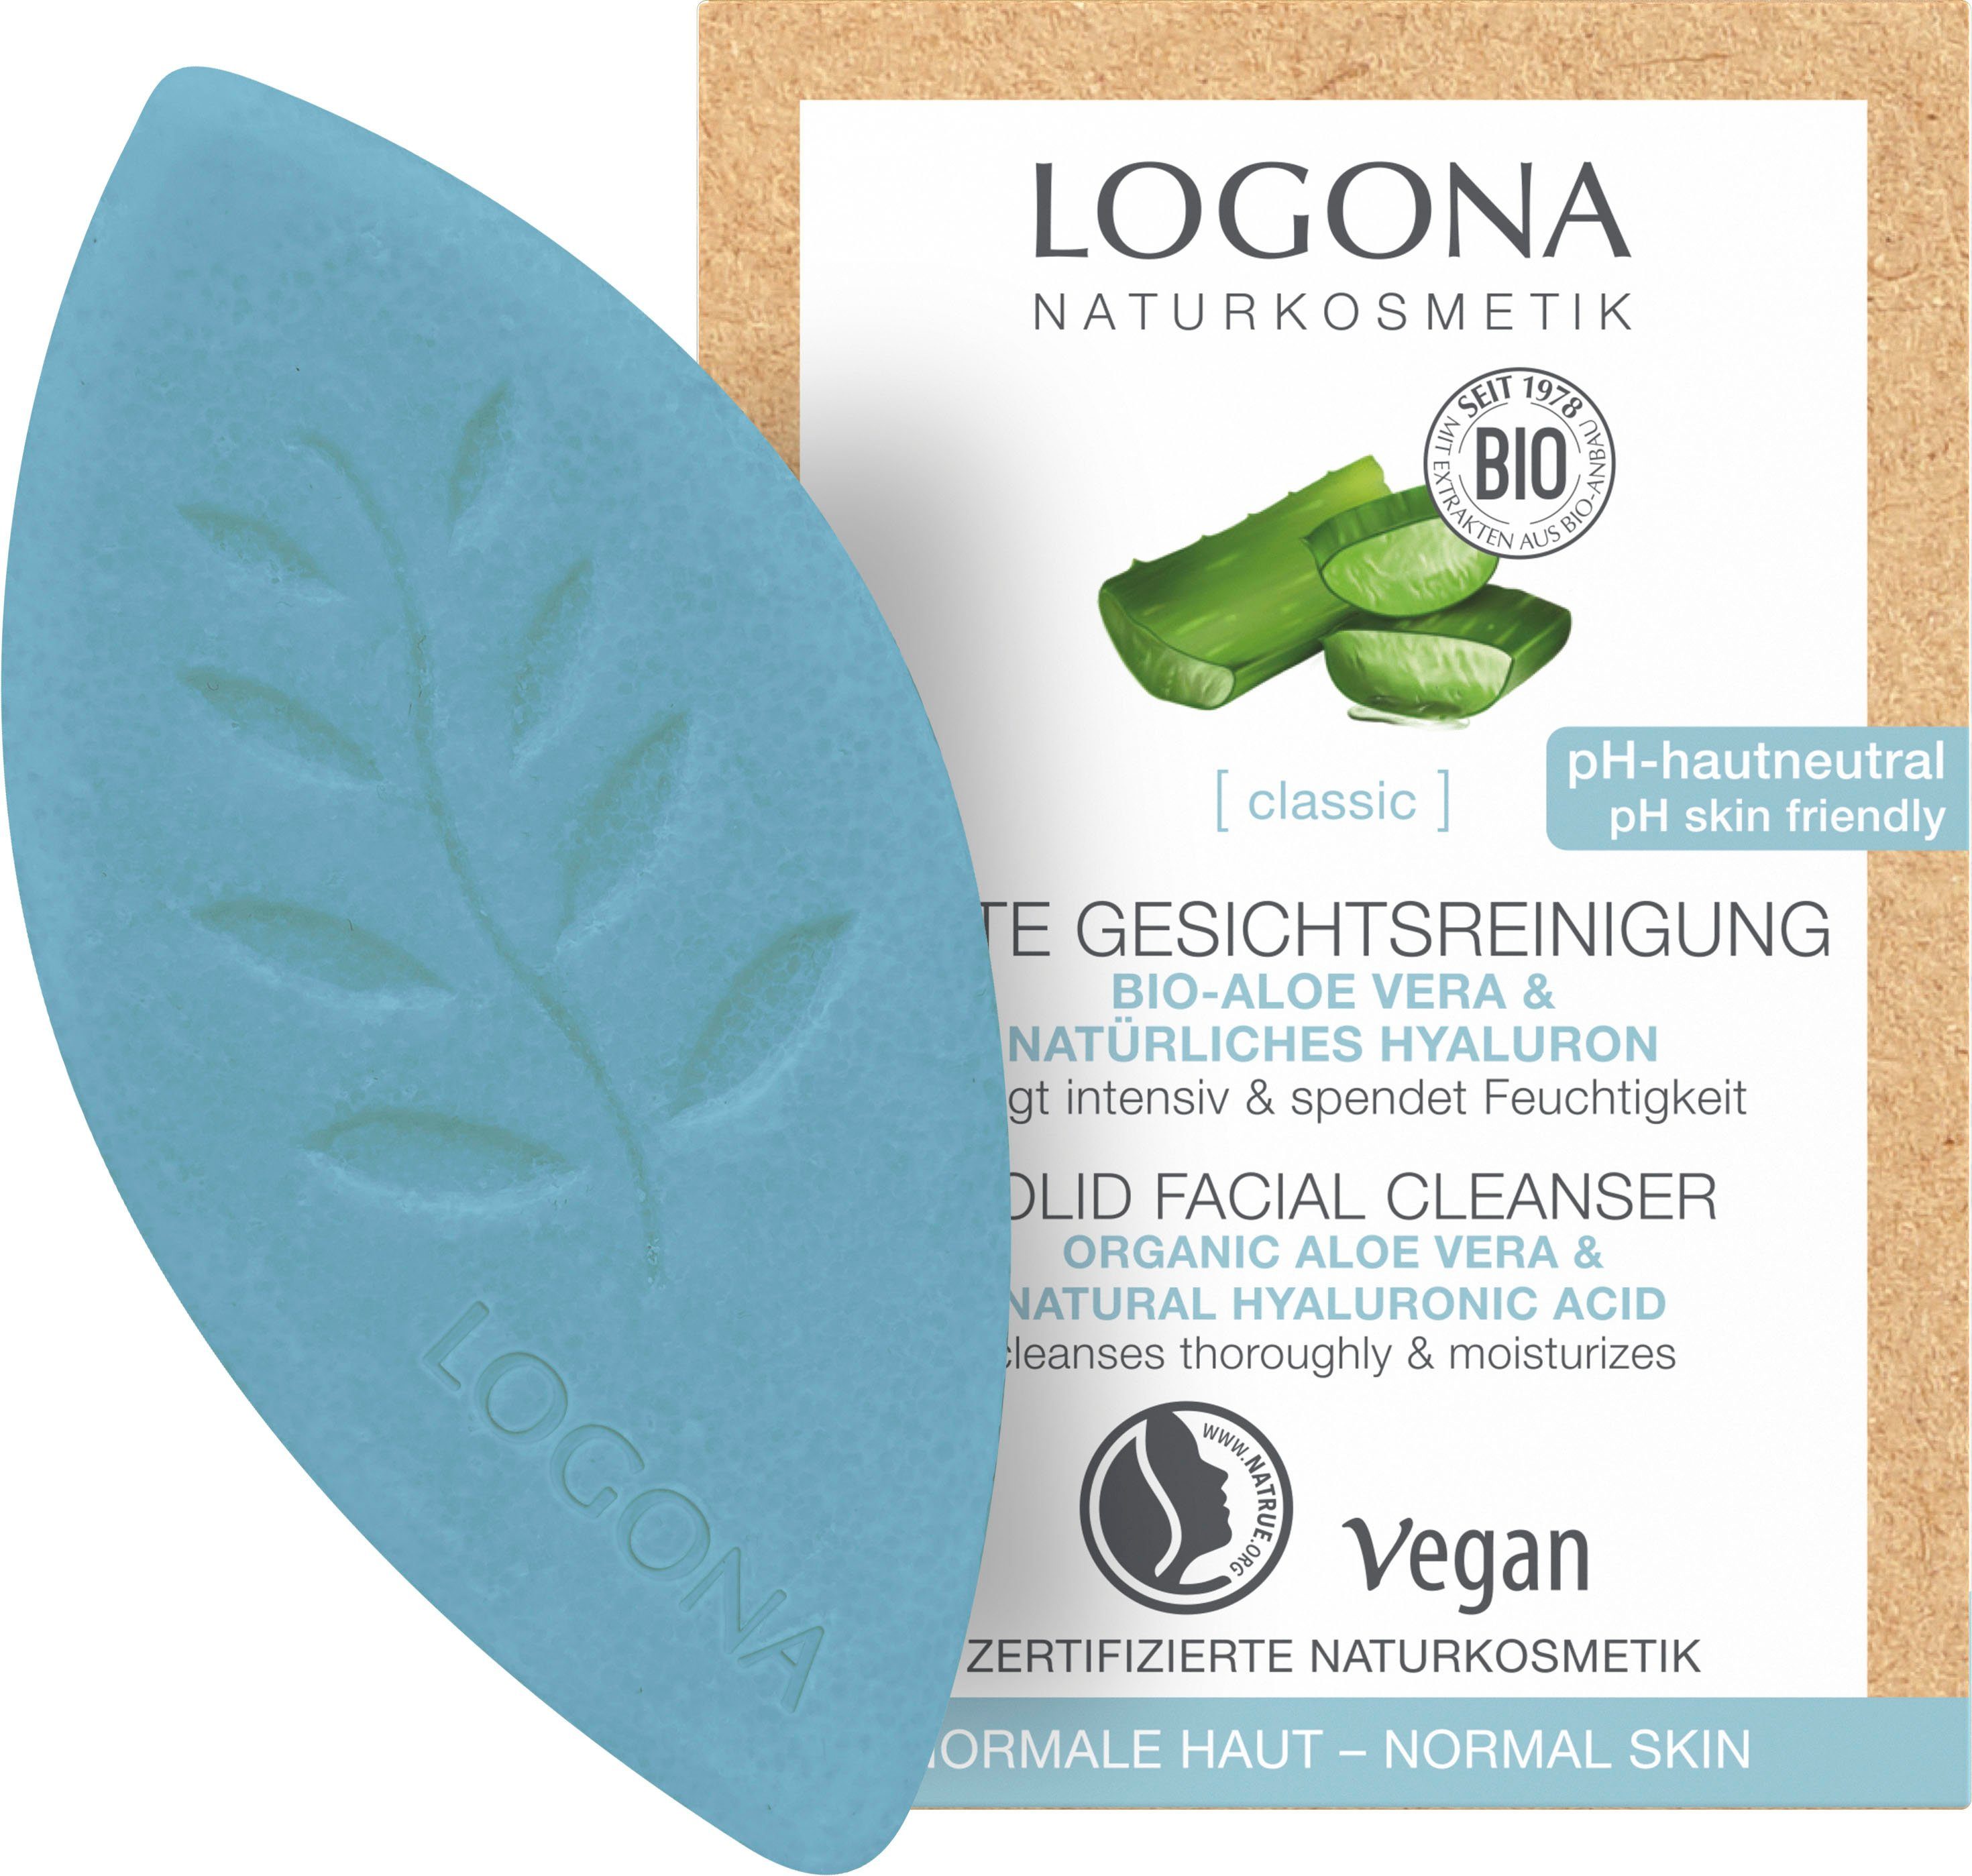 Logona Feste LOGONA Naturprodukt Gesichtsreinigung, Gesichtsseife [classic]